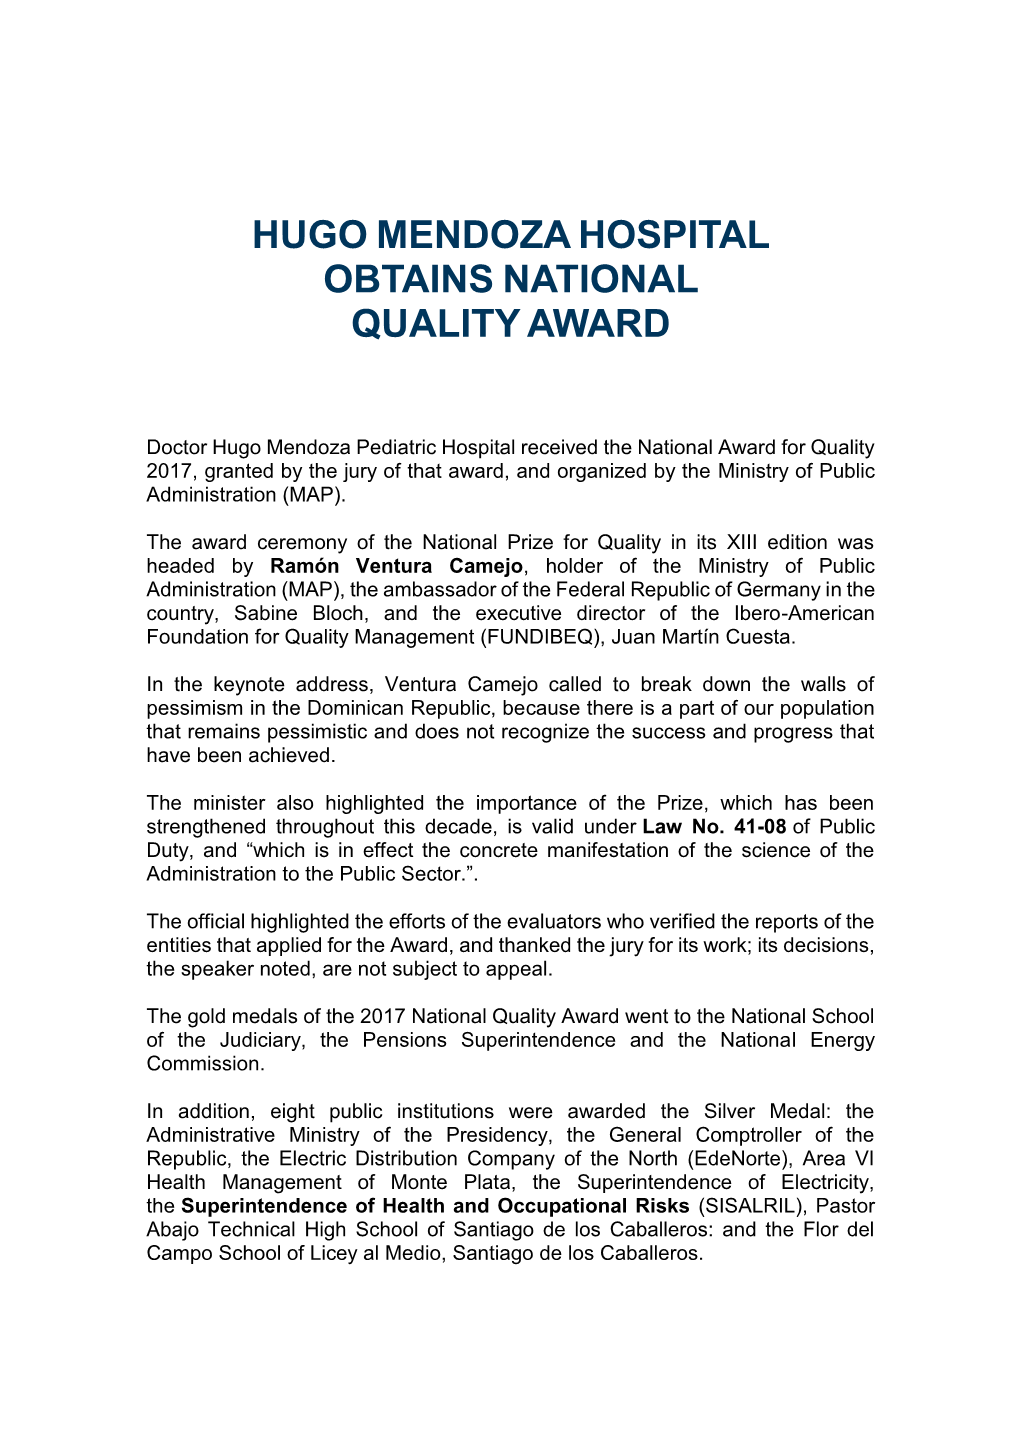 Hugo Mendoza Hospital Obtains National Qualityaward